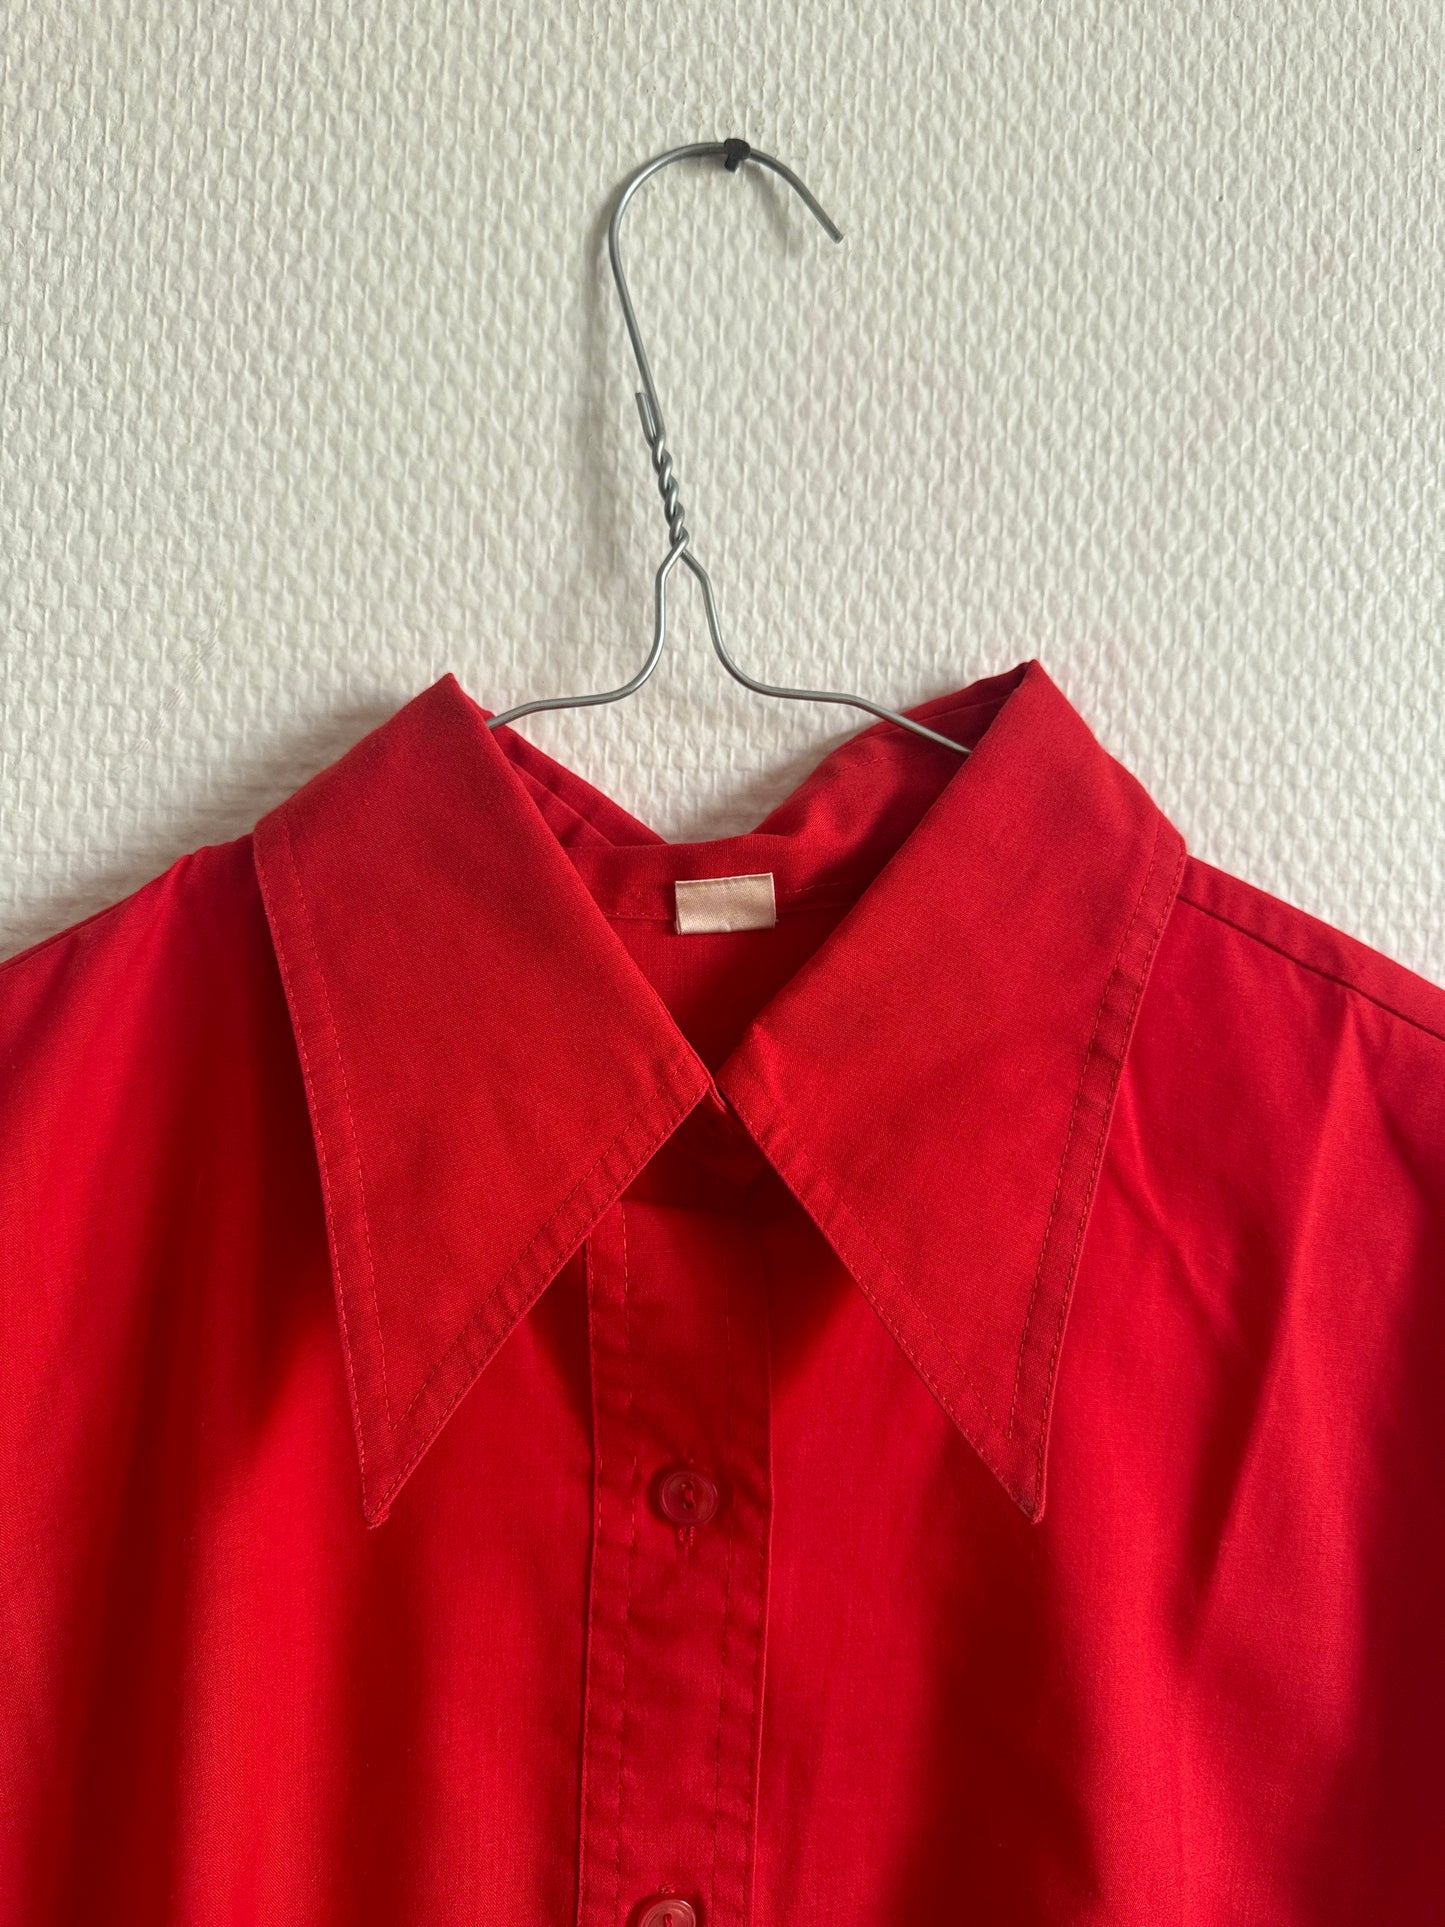 Chemise rouge 70s